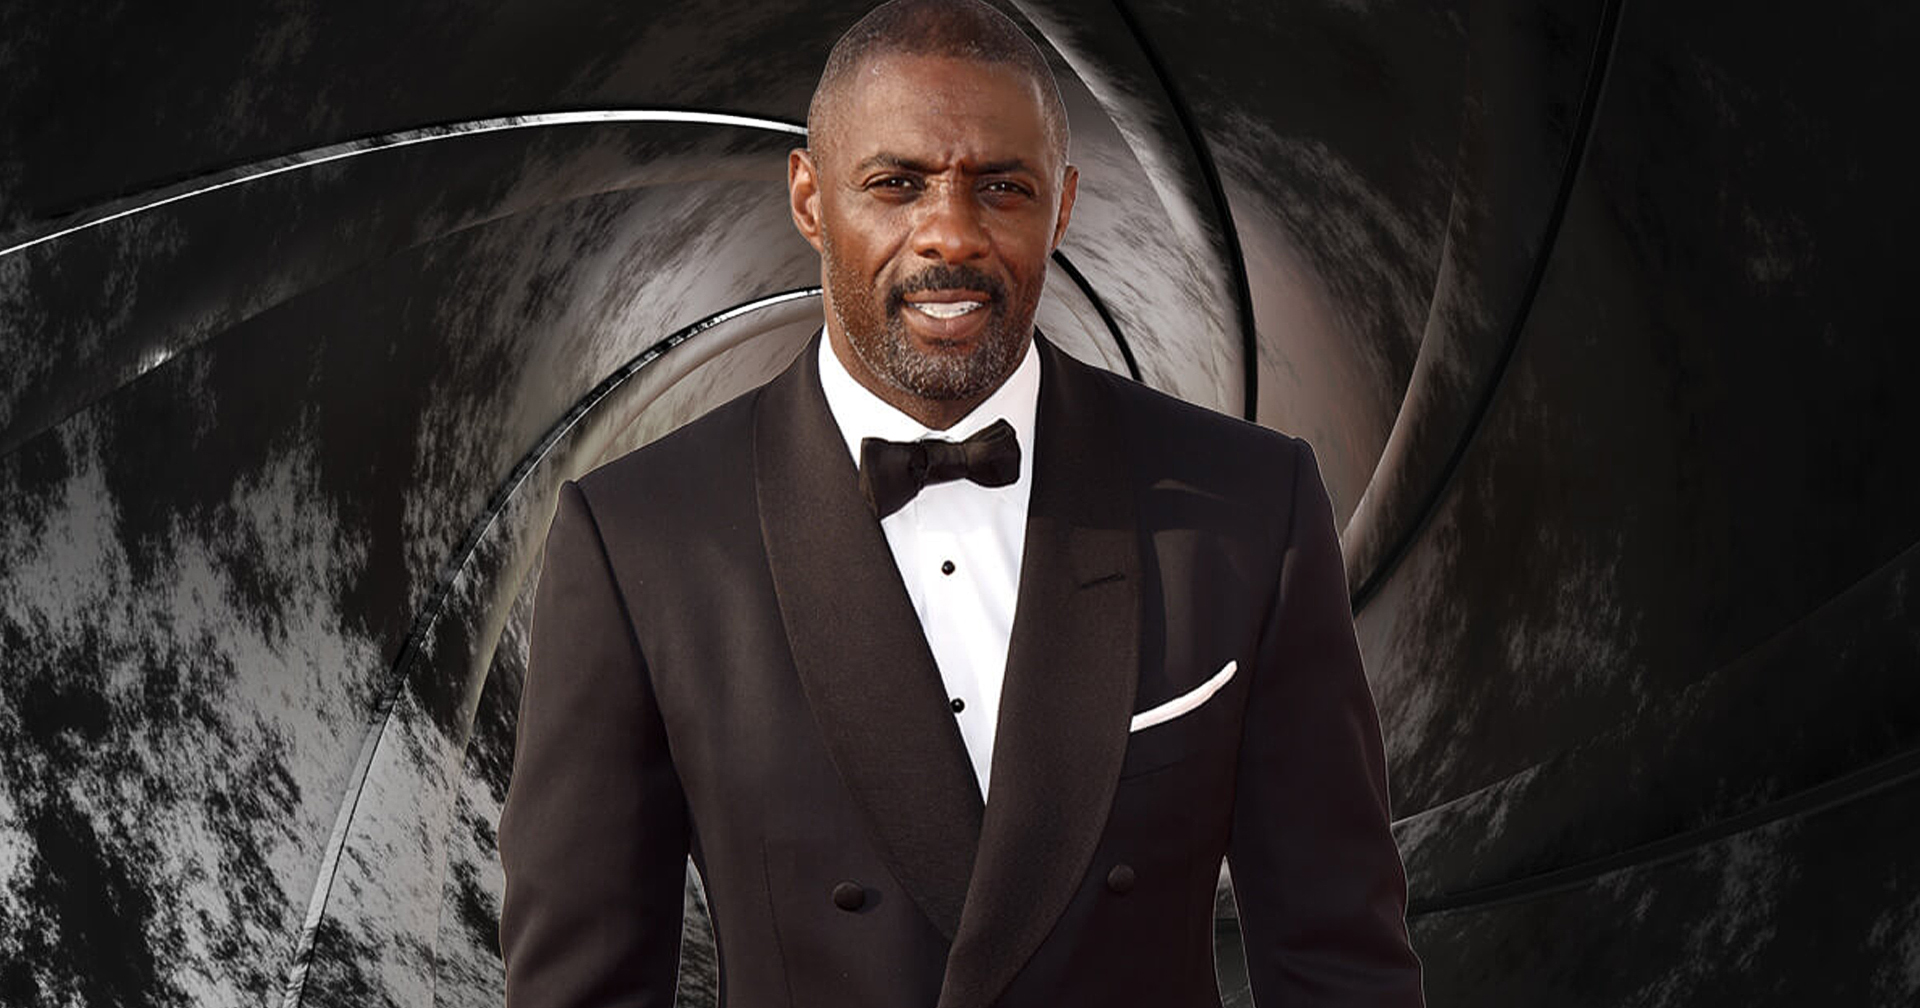 Idris Elba กลับมาเป็นตัวเก็งอีกครั้ง ที่จะได้เป็น เจมส์ บอนด์ คนต่อไป